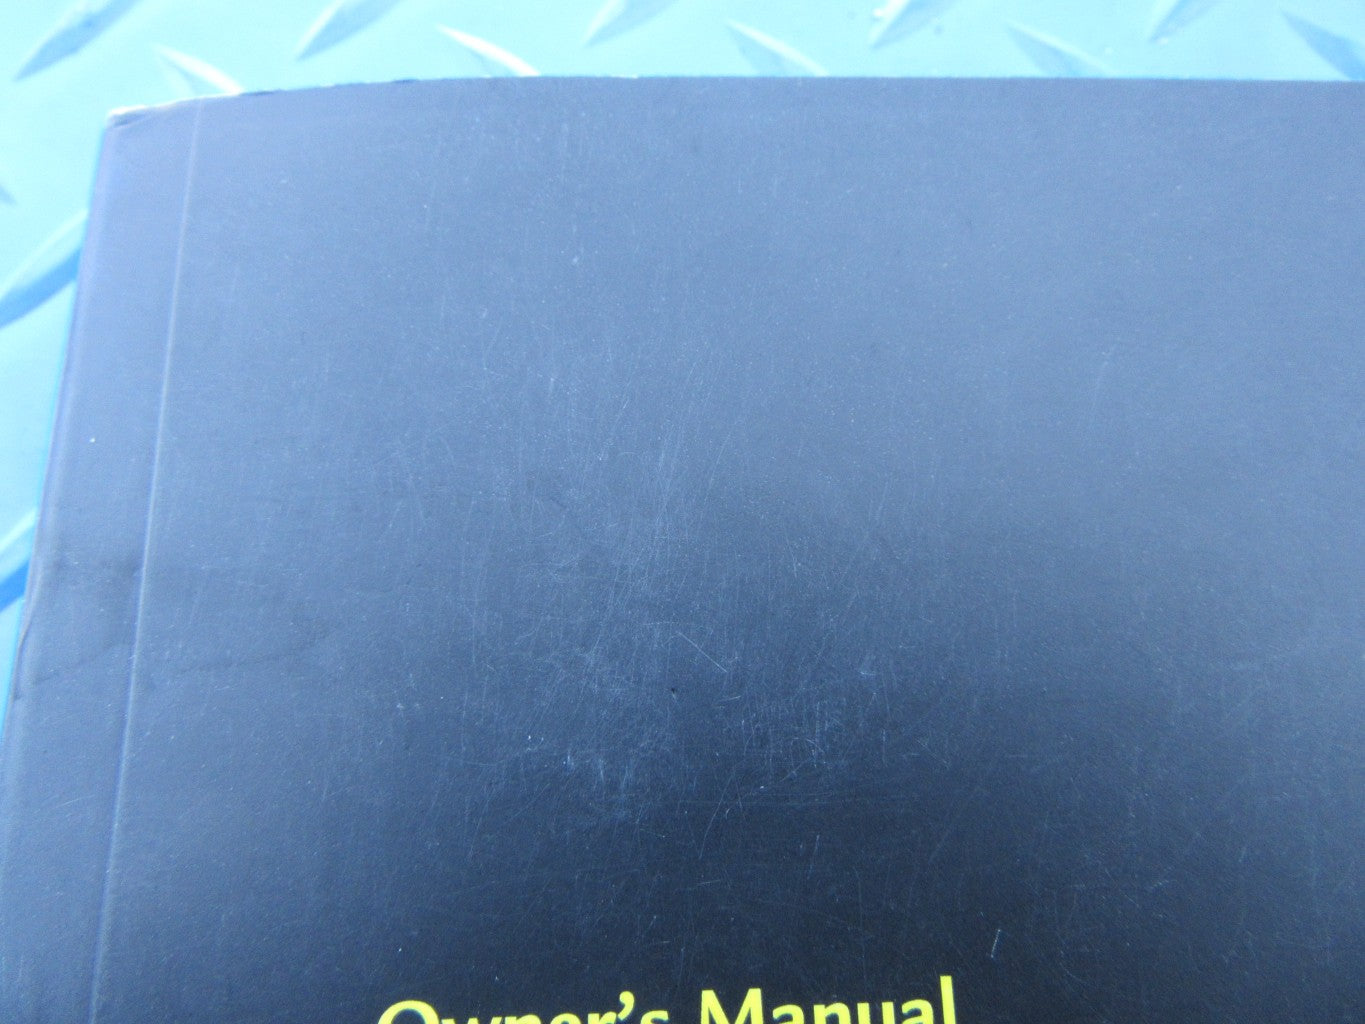 Ferrari 2008 F430 Spider owners manual #2499